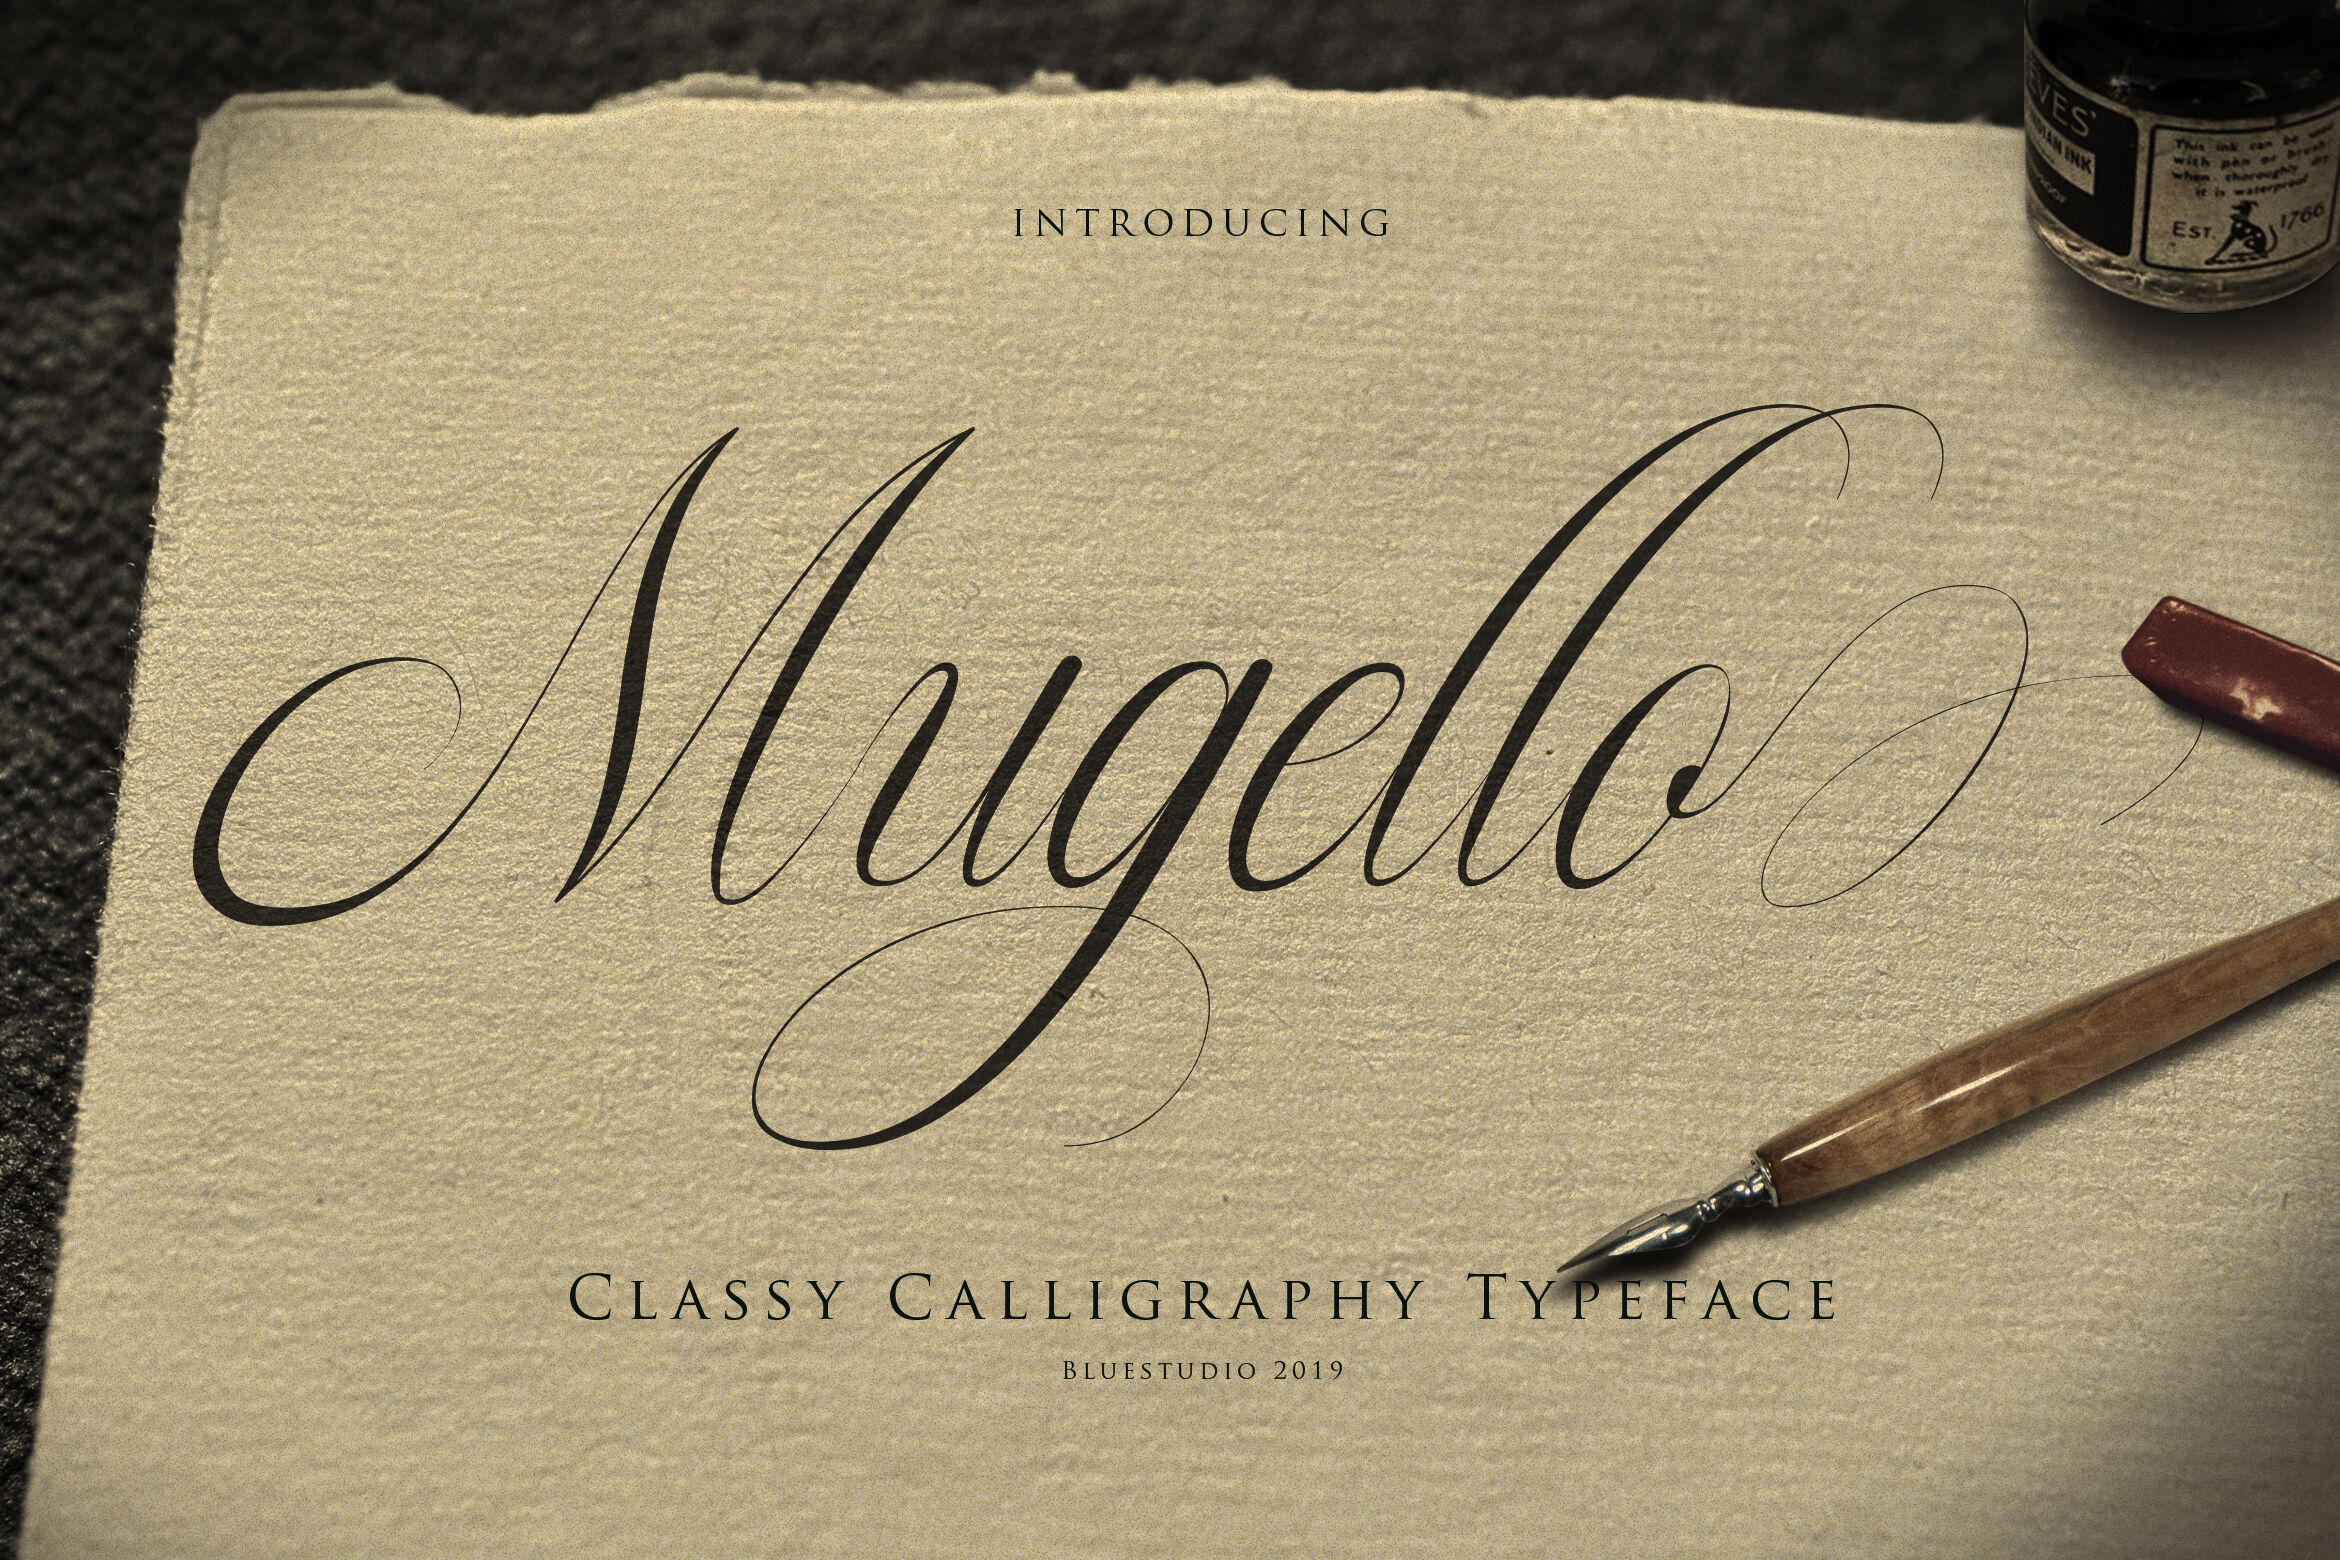 Mugello Classy Calligraphy By Bluestudio Thehungryjpeg Com